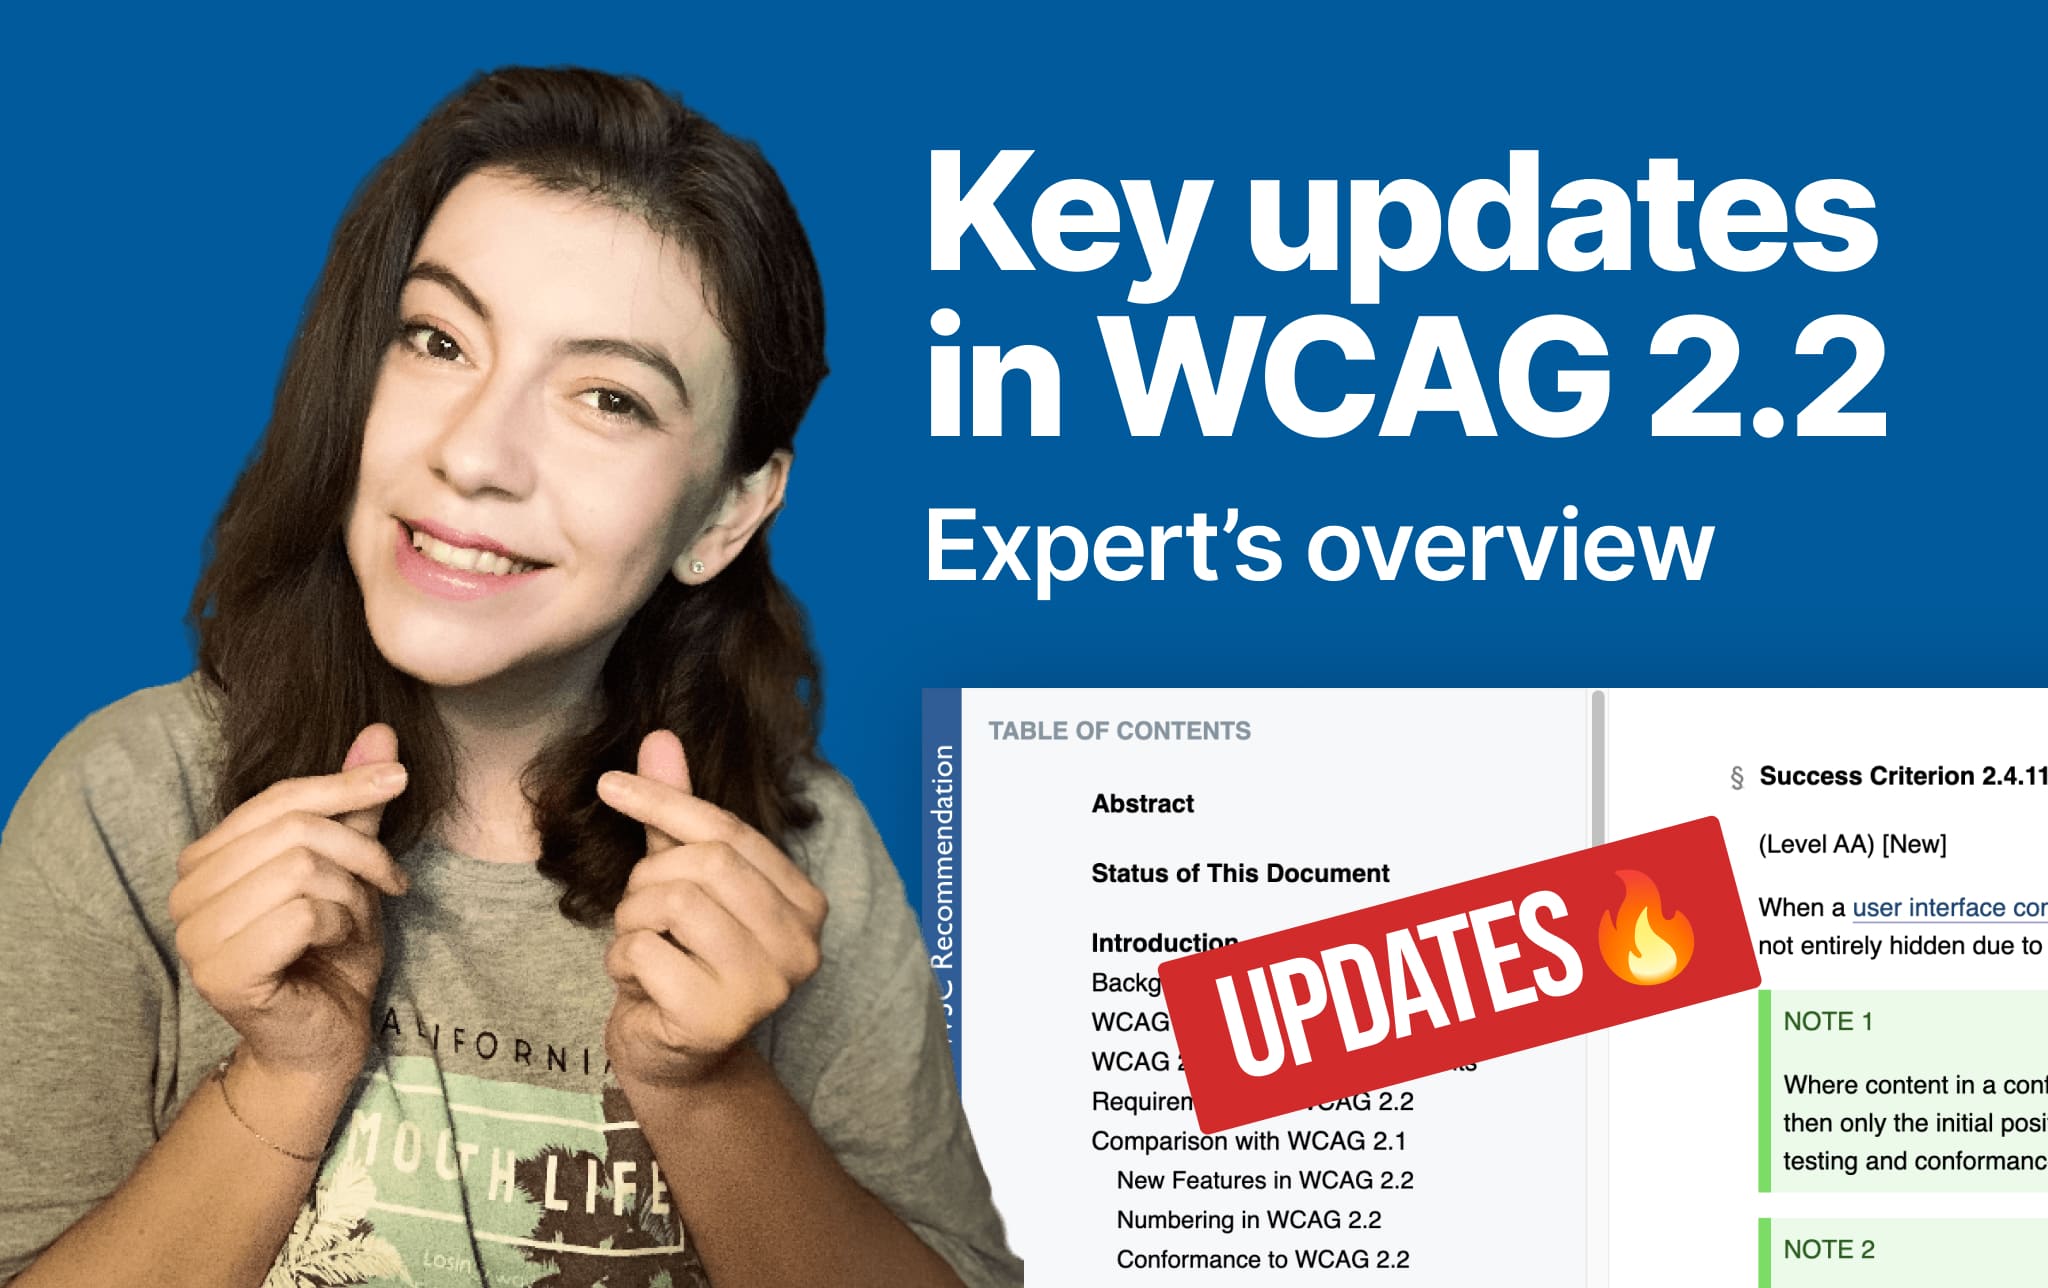 Key updates in WCAG 2.2 Expert’s overview